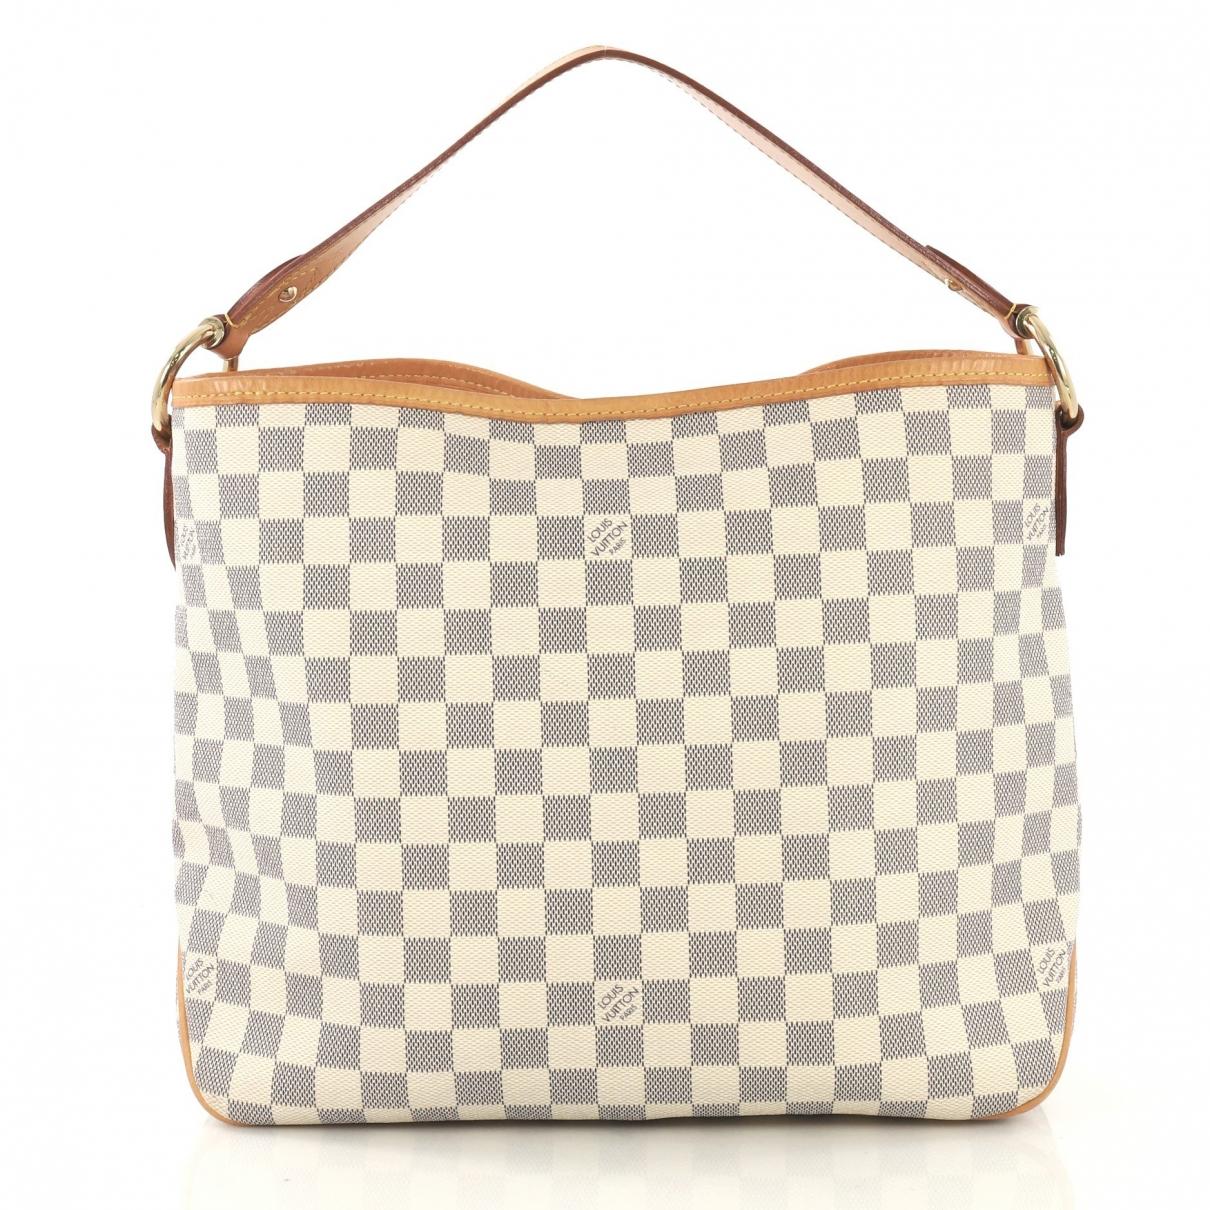 Delightful Louis Vuitton Handbags for Women - Vestiaire Collective